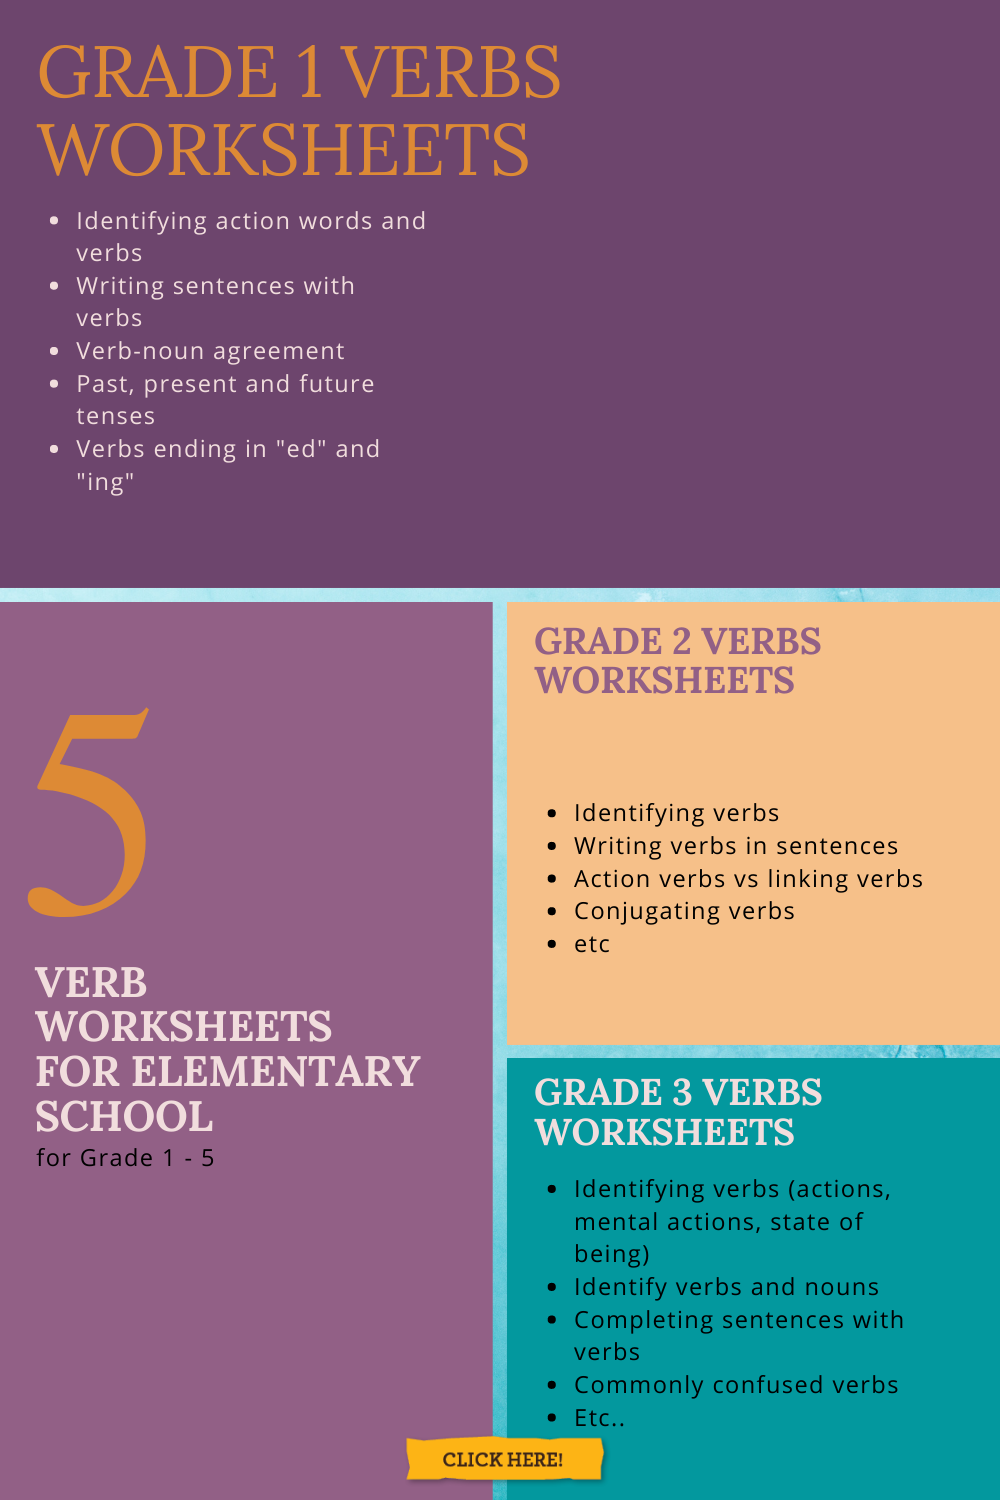 verb-worksheets-for-elementary-school-worksheets-free